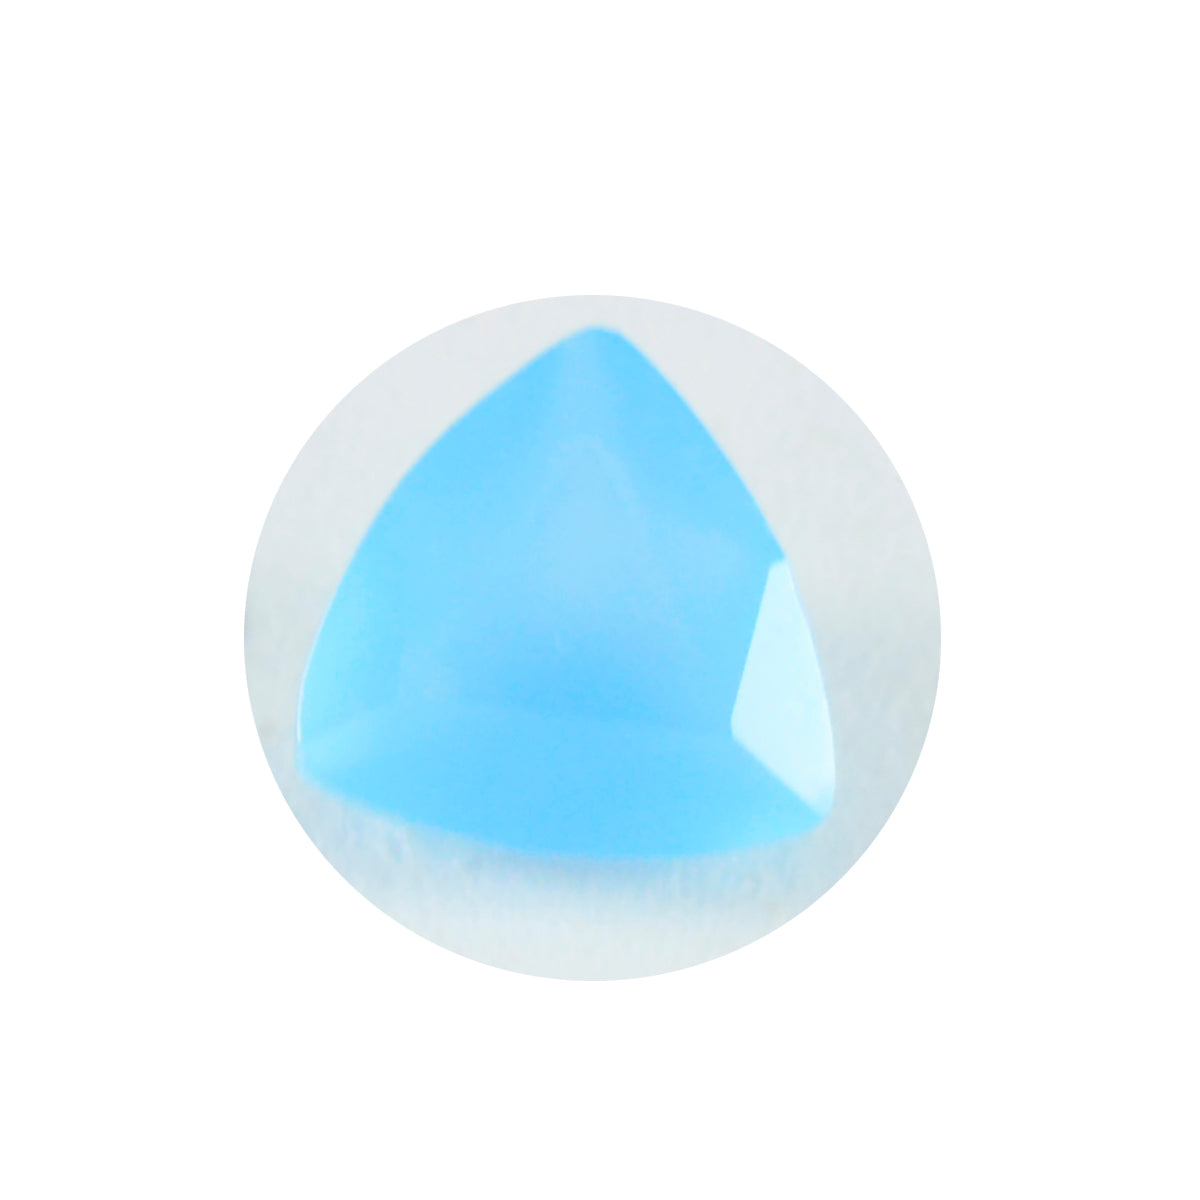 Riyogems 1PC Genuine Blue Chalcedony Faceted 9x9 mm Trillion Shape great Quality Gemstone